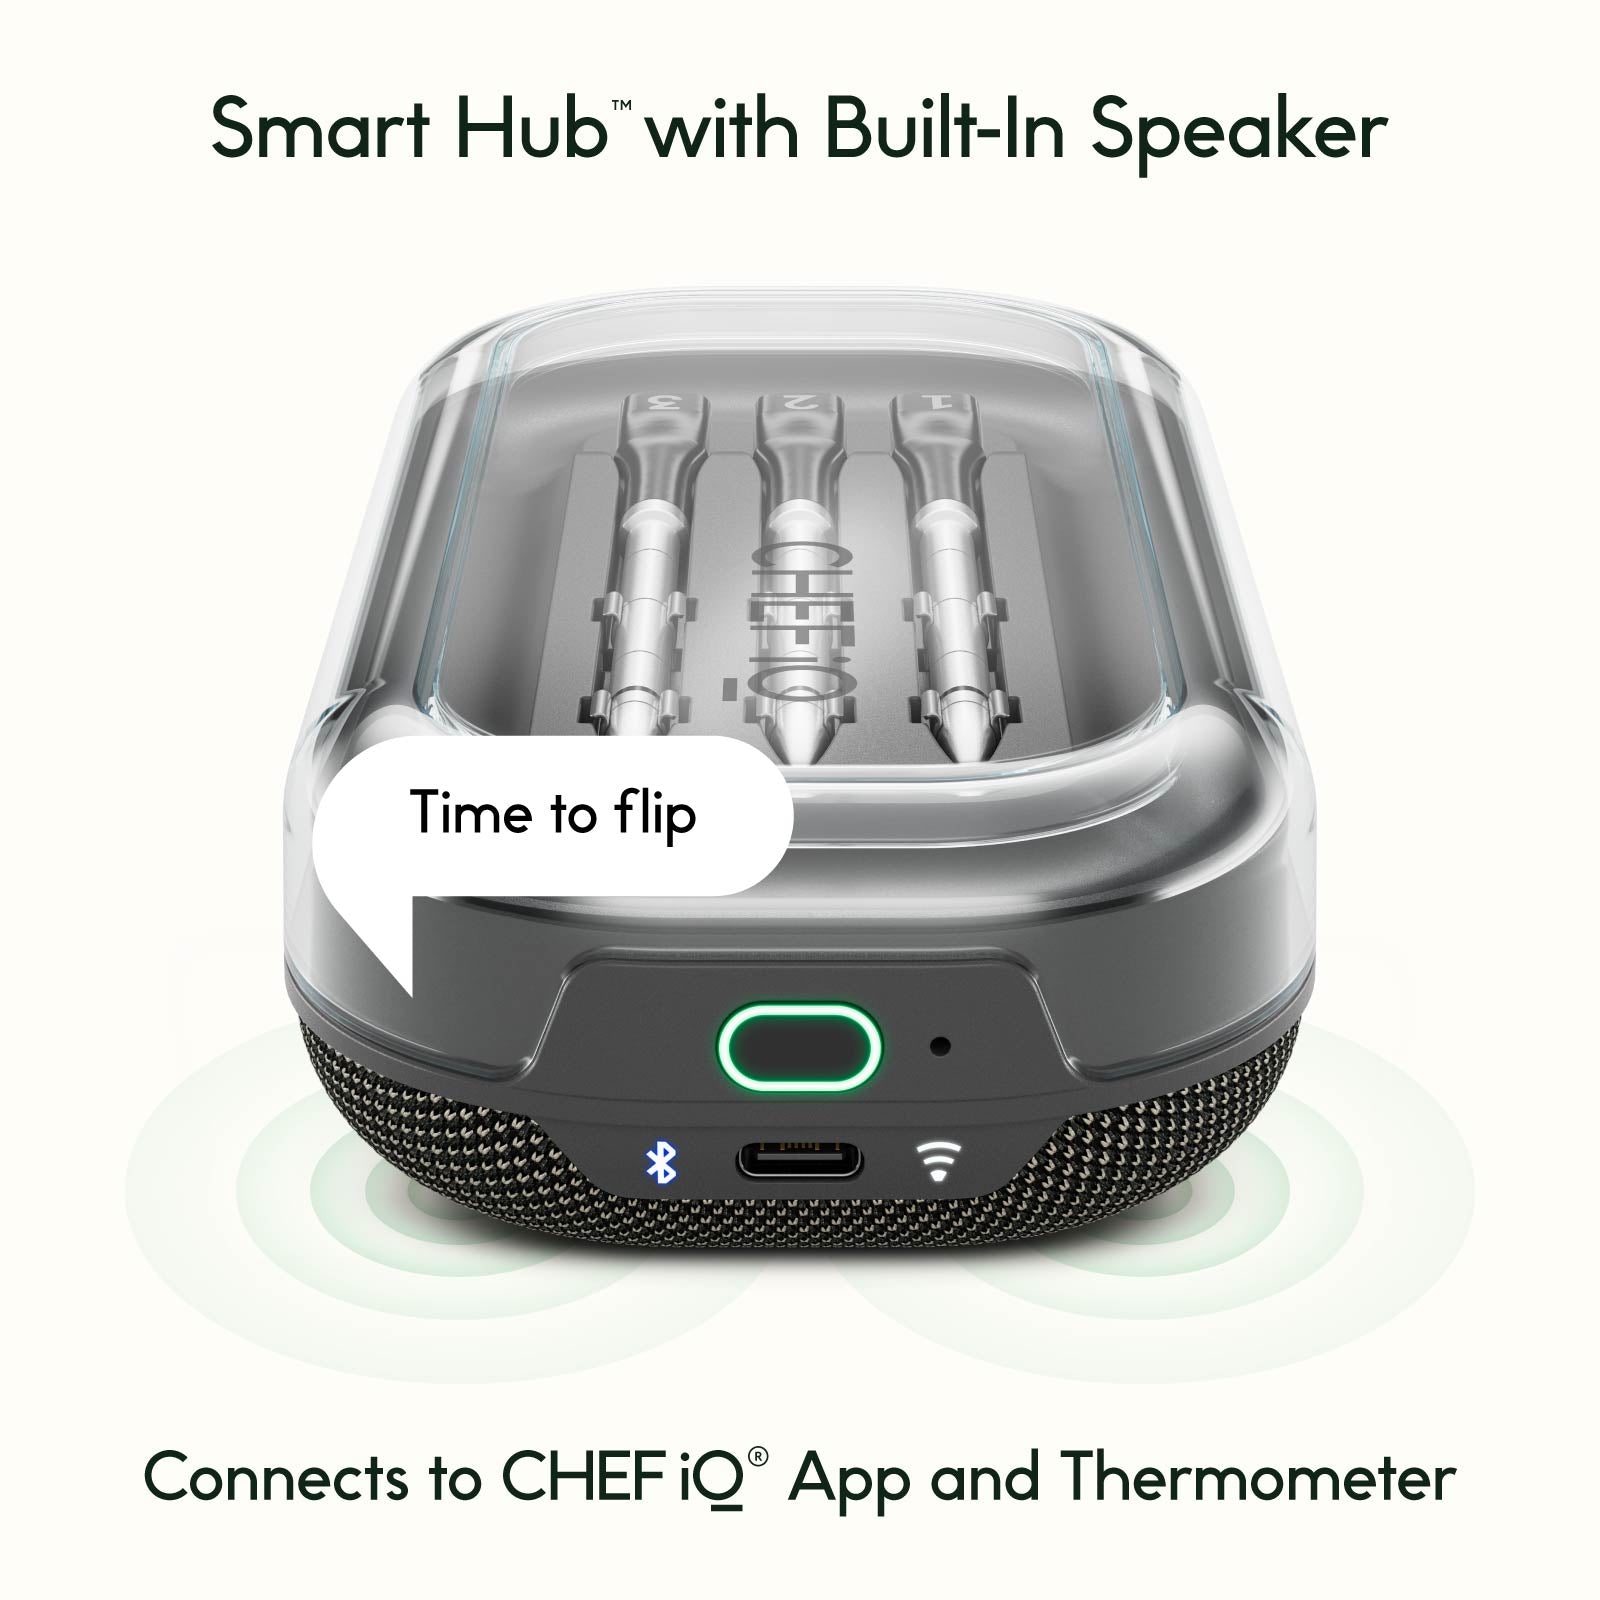 Best Buy: CHEF iQ Smart Thermometer Black CQ60-1-SET